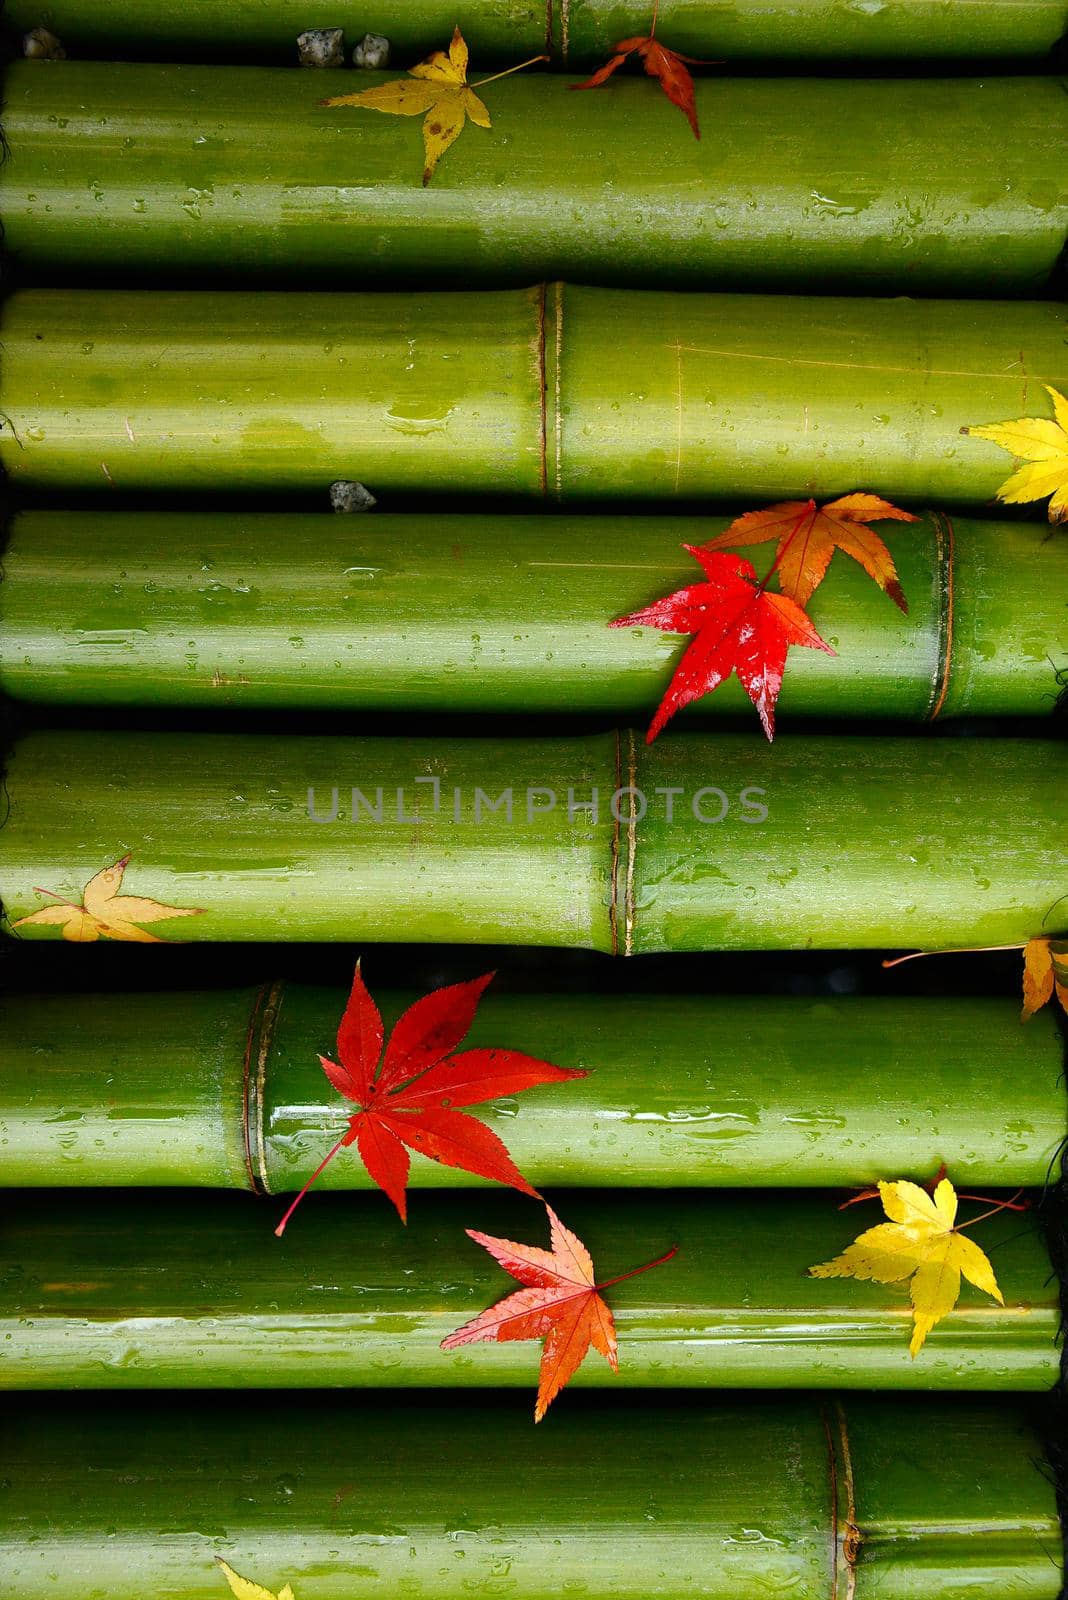 maple on bamboo row by porbital